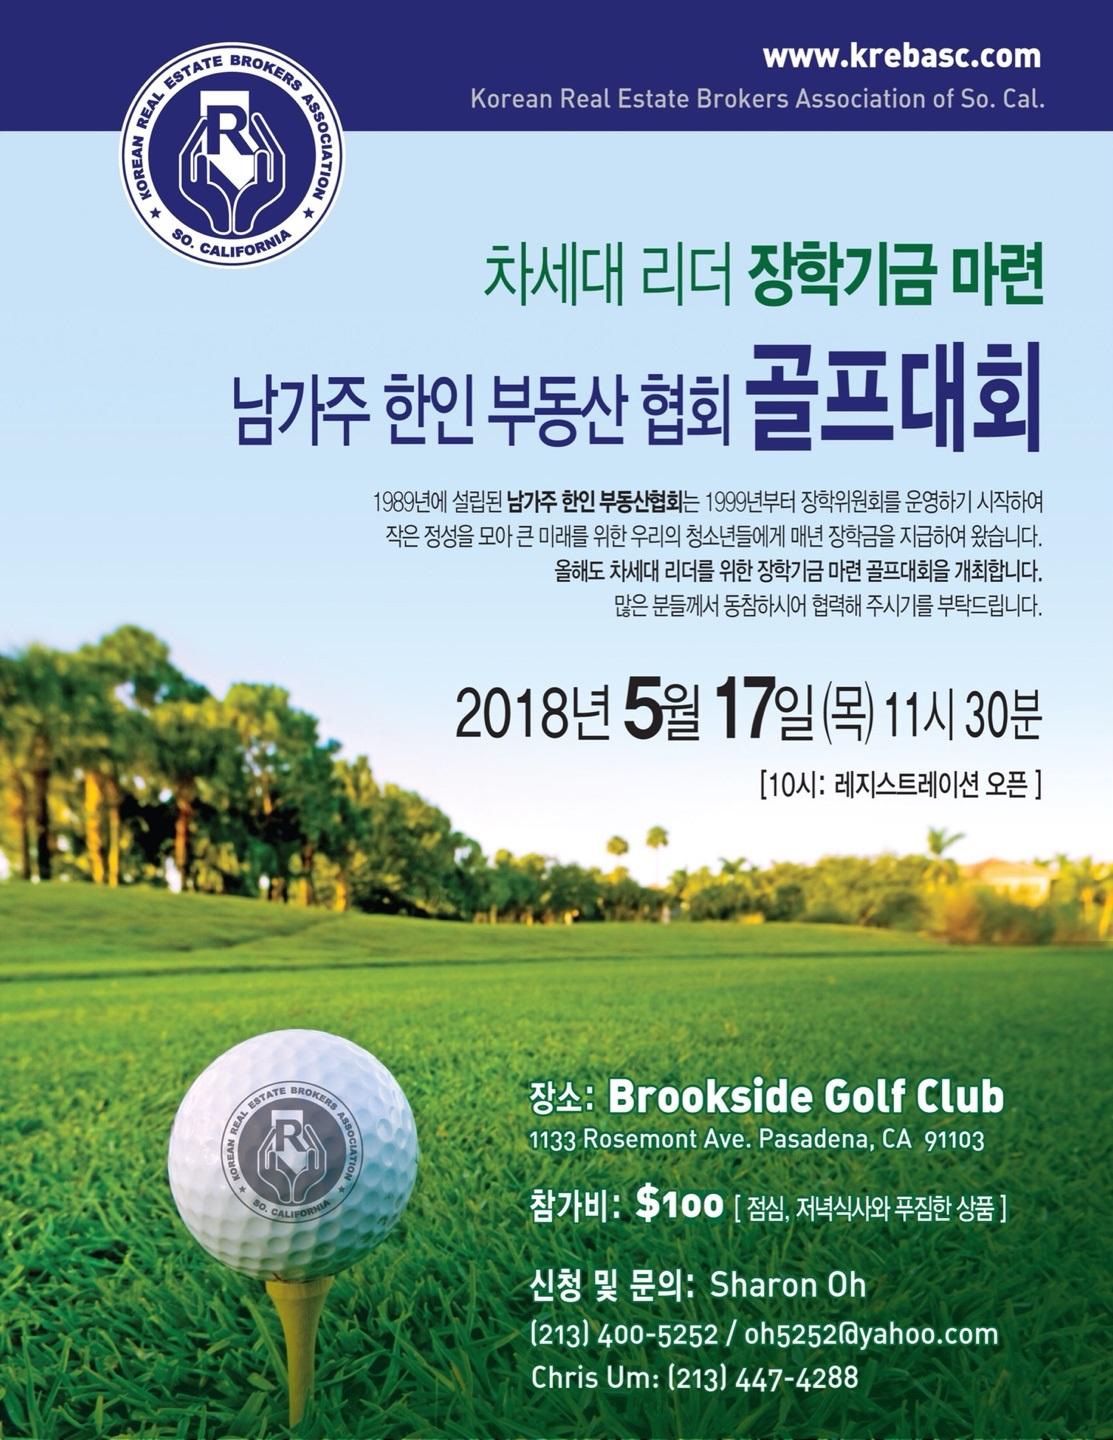 KREBA Scholarship Charity Golf Tournament